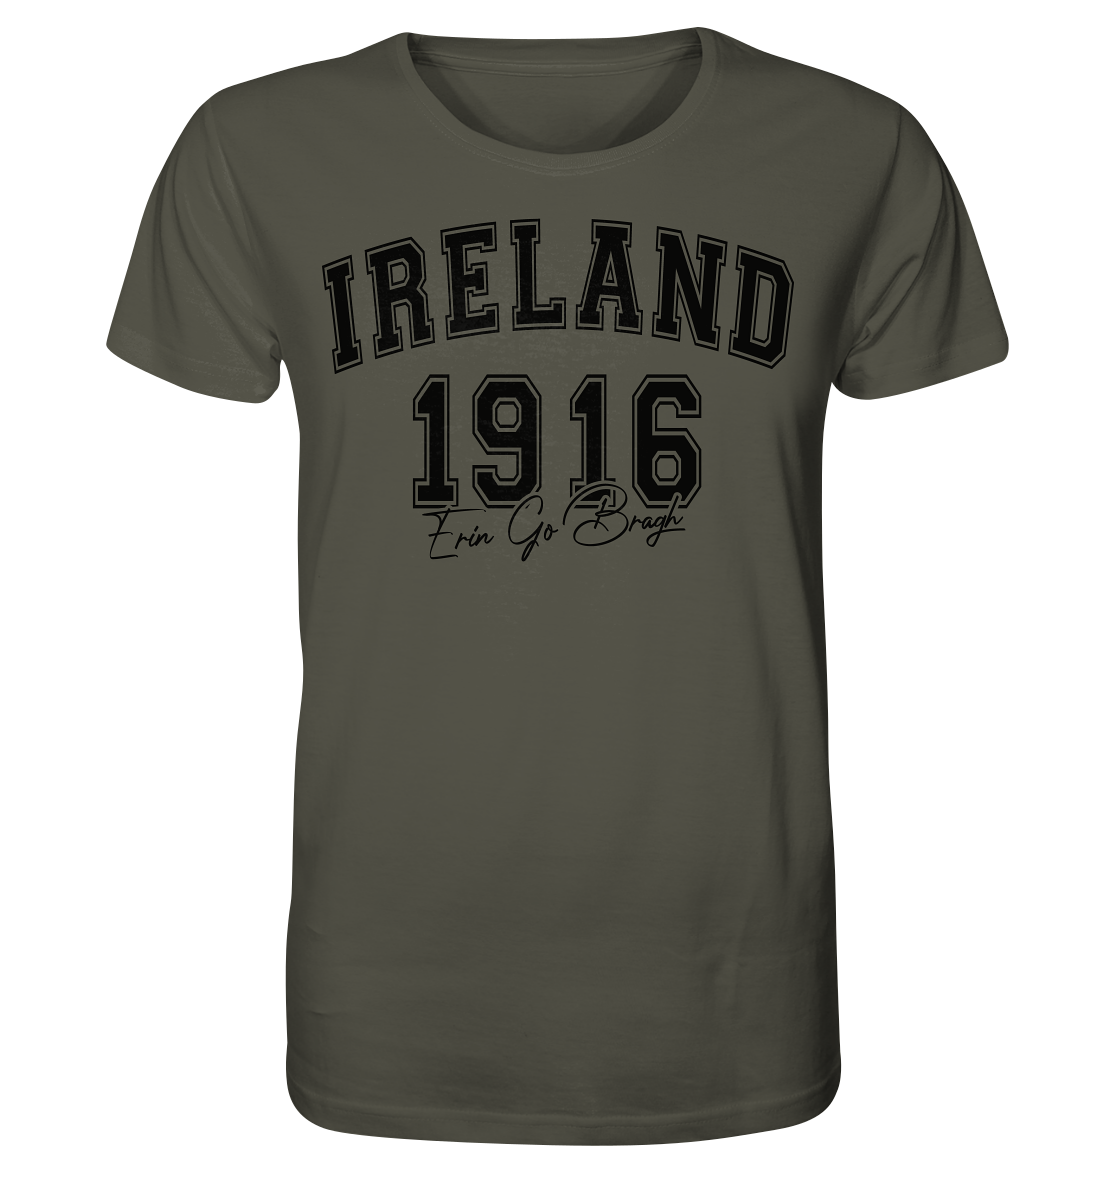 Ireland "1916 / Erin Go Bragh" - Organic Shirt